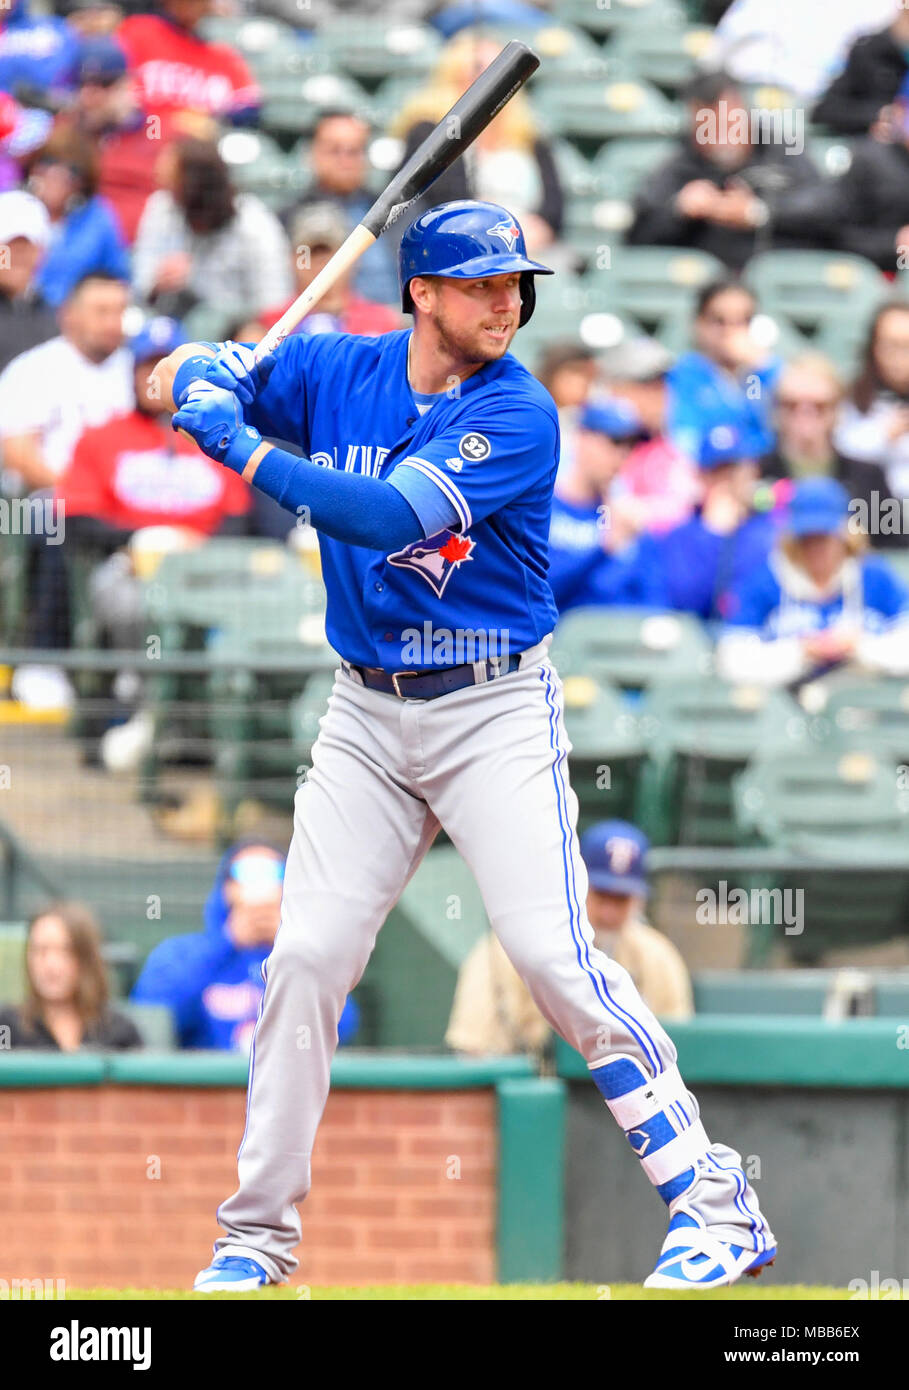 Apr 08, 2018: Toronto Blue Jays first baseman Justin Smoak #14 at